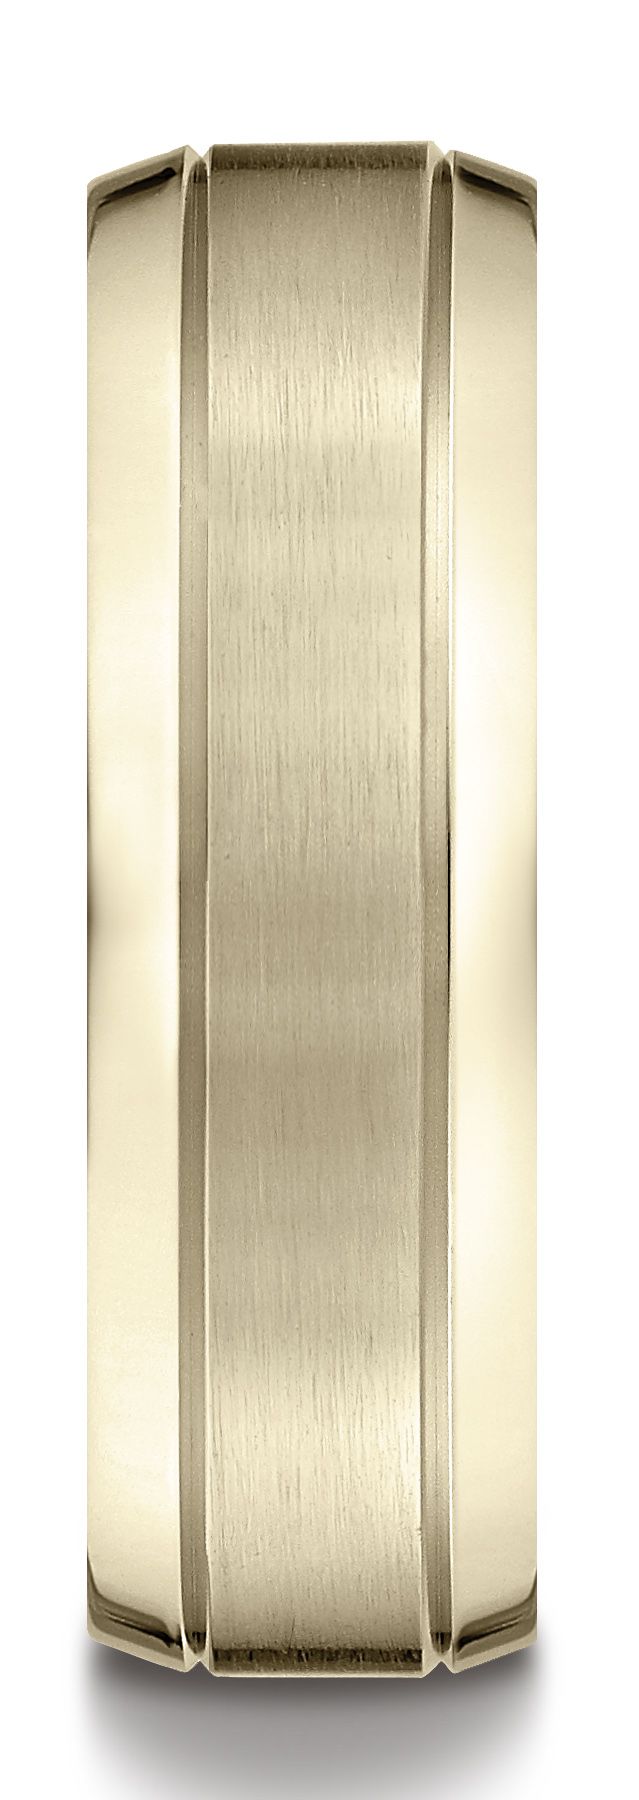 18k Yellow Gold 7mm Comfort-fit Satin-finished High Polished Beveled Edge Carved Design Band